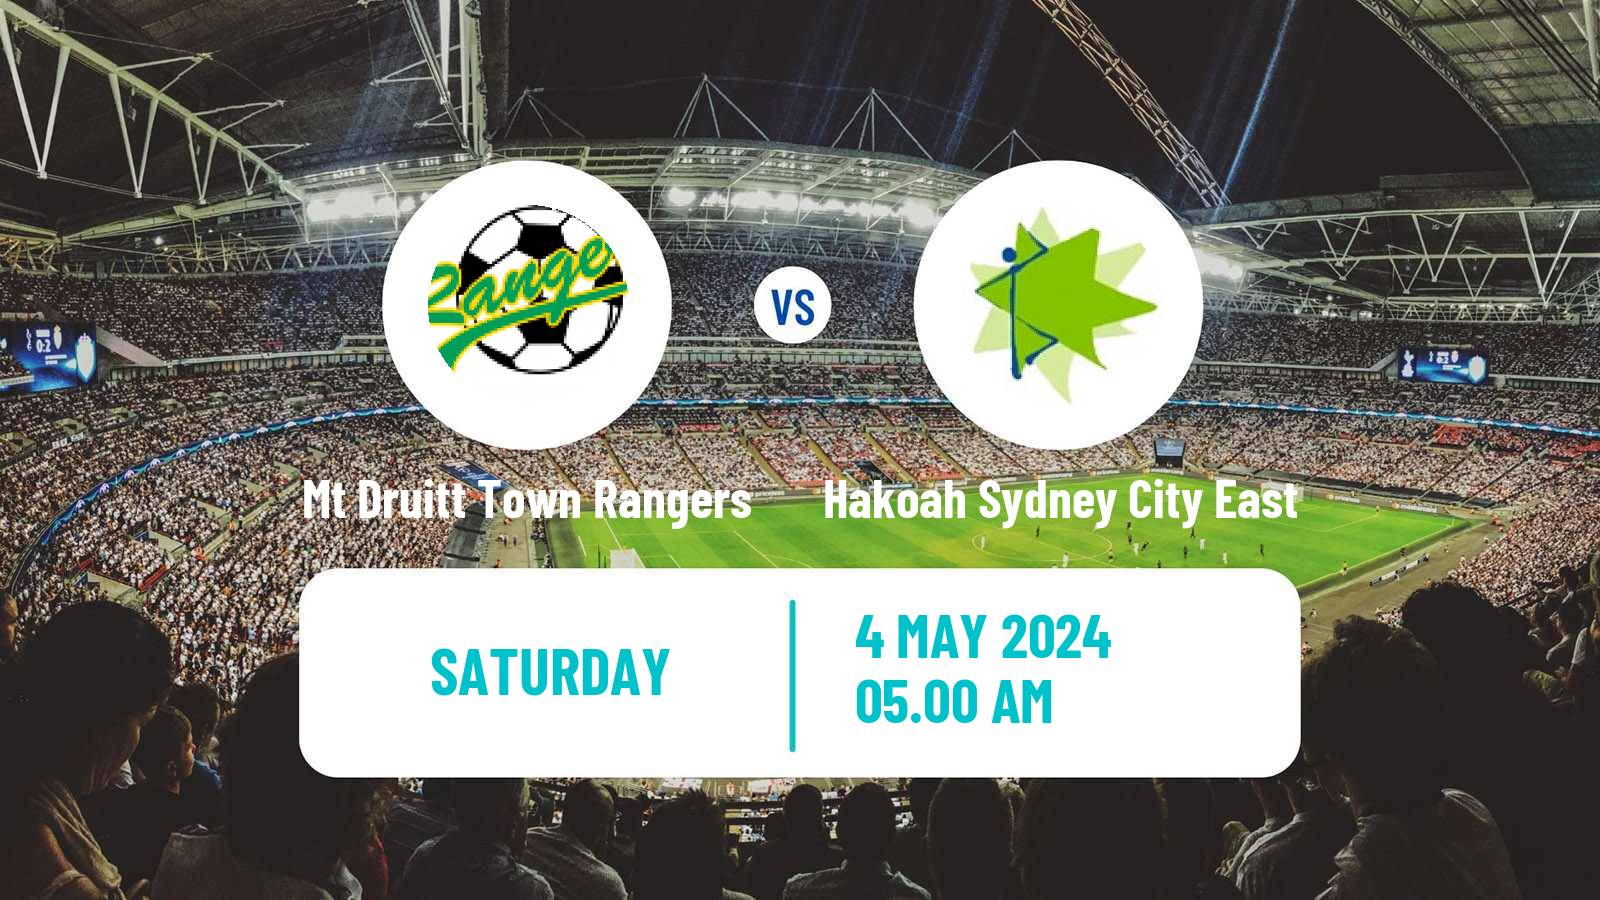 Soccer Australian NSW League One Mt Druitt Town Rangers - Hakoah Sydney City East